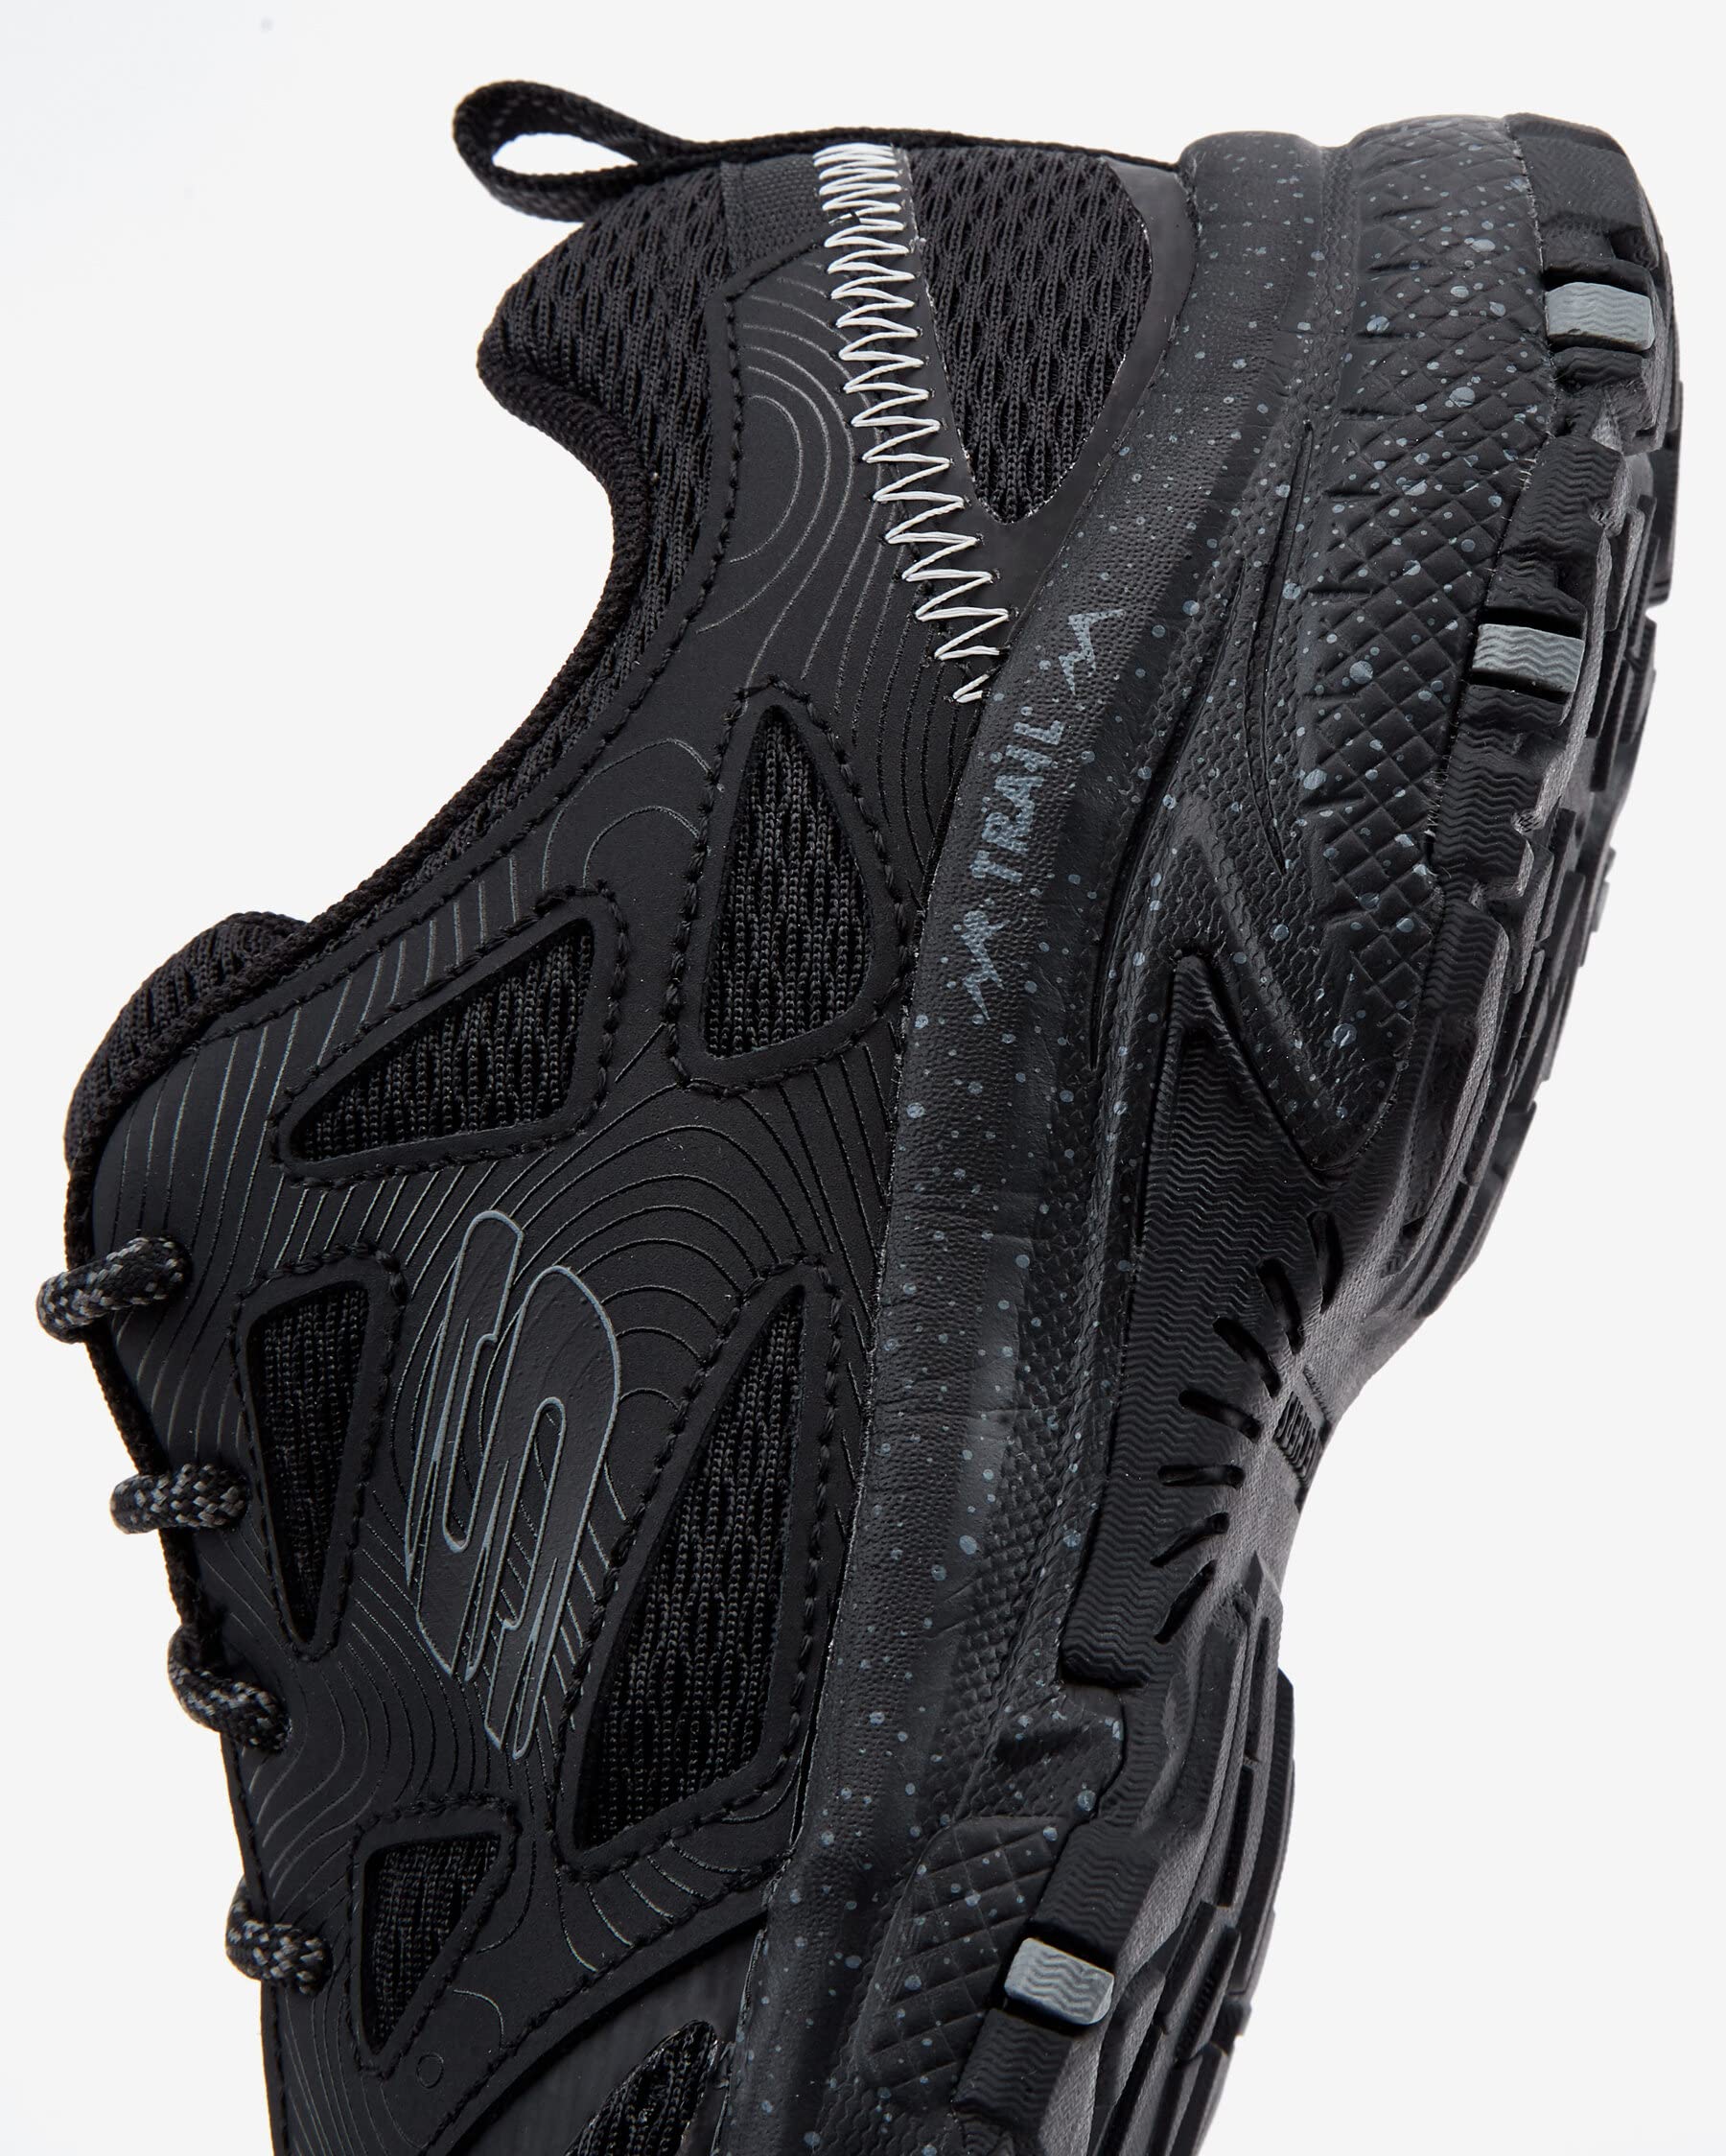 Skechers Womens Hillcrest Pure Escapade Trail Black Athletic Hiking Shoes 7.5